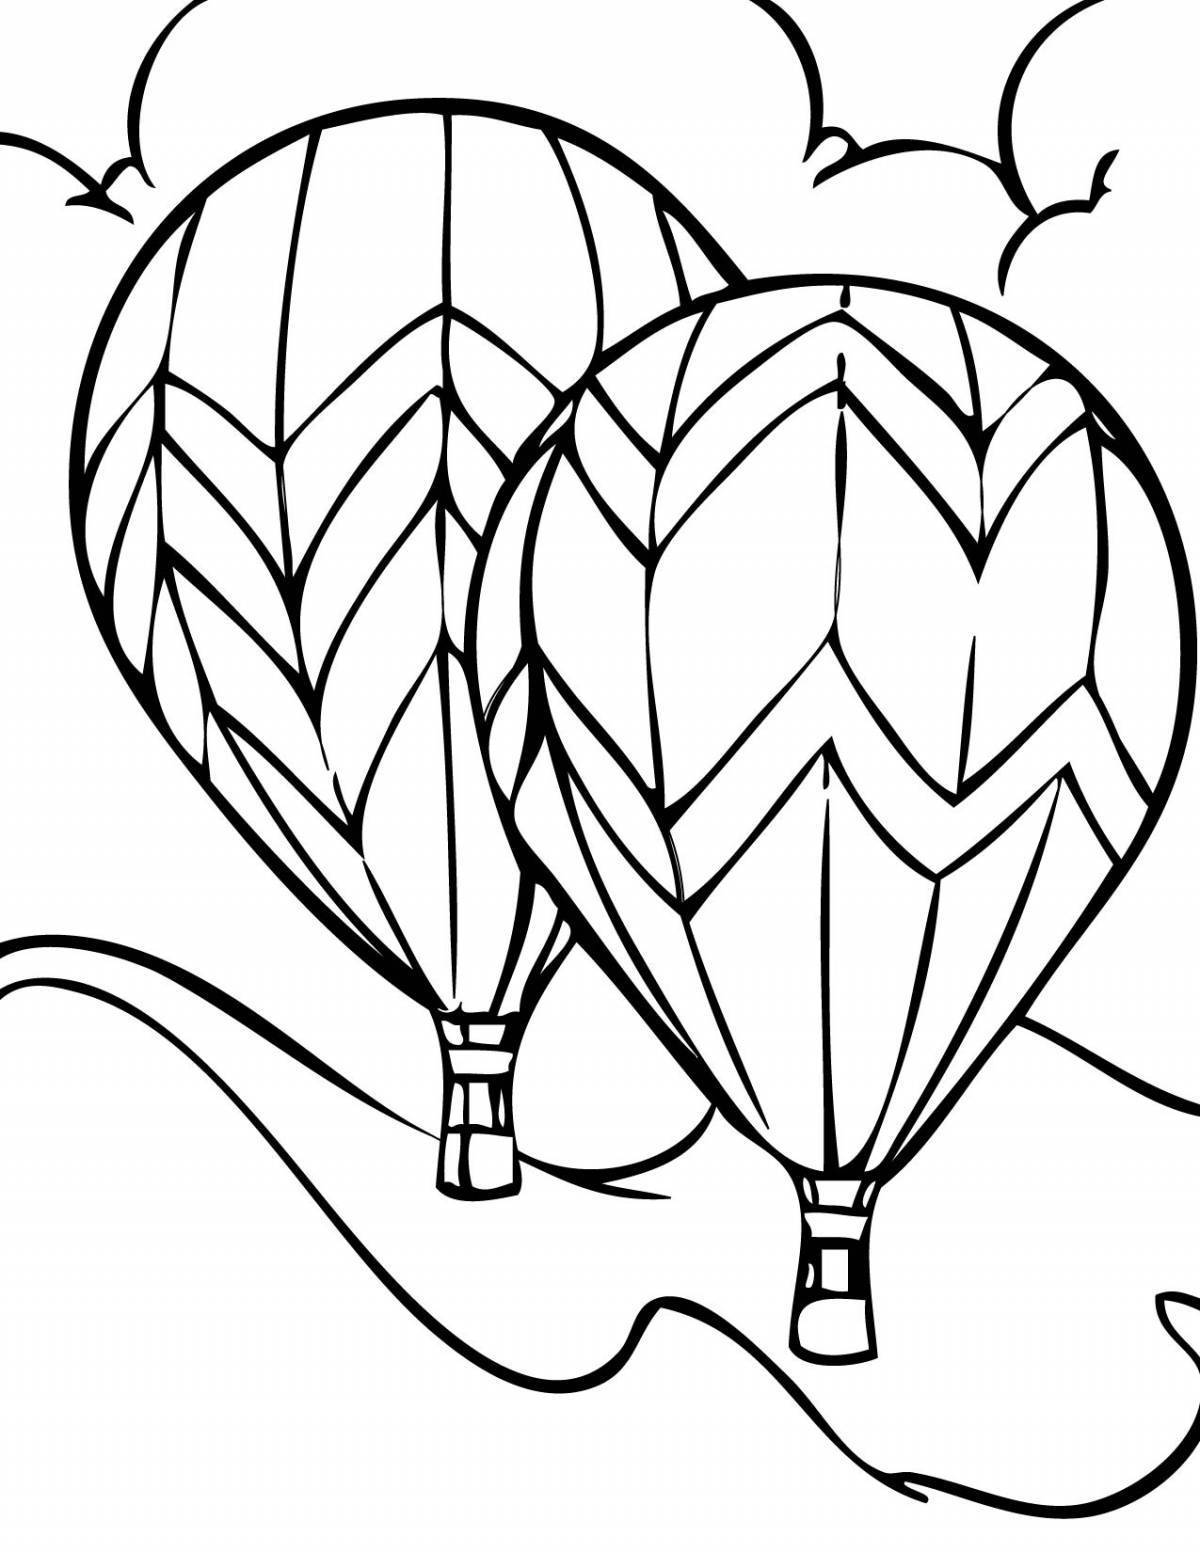 Joyful hot air balloon coloring page